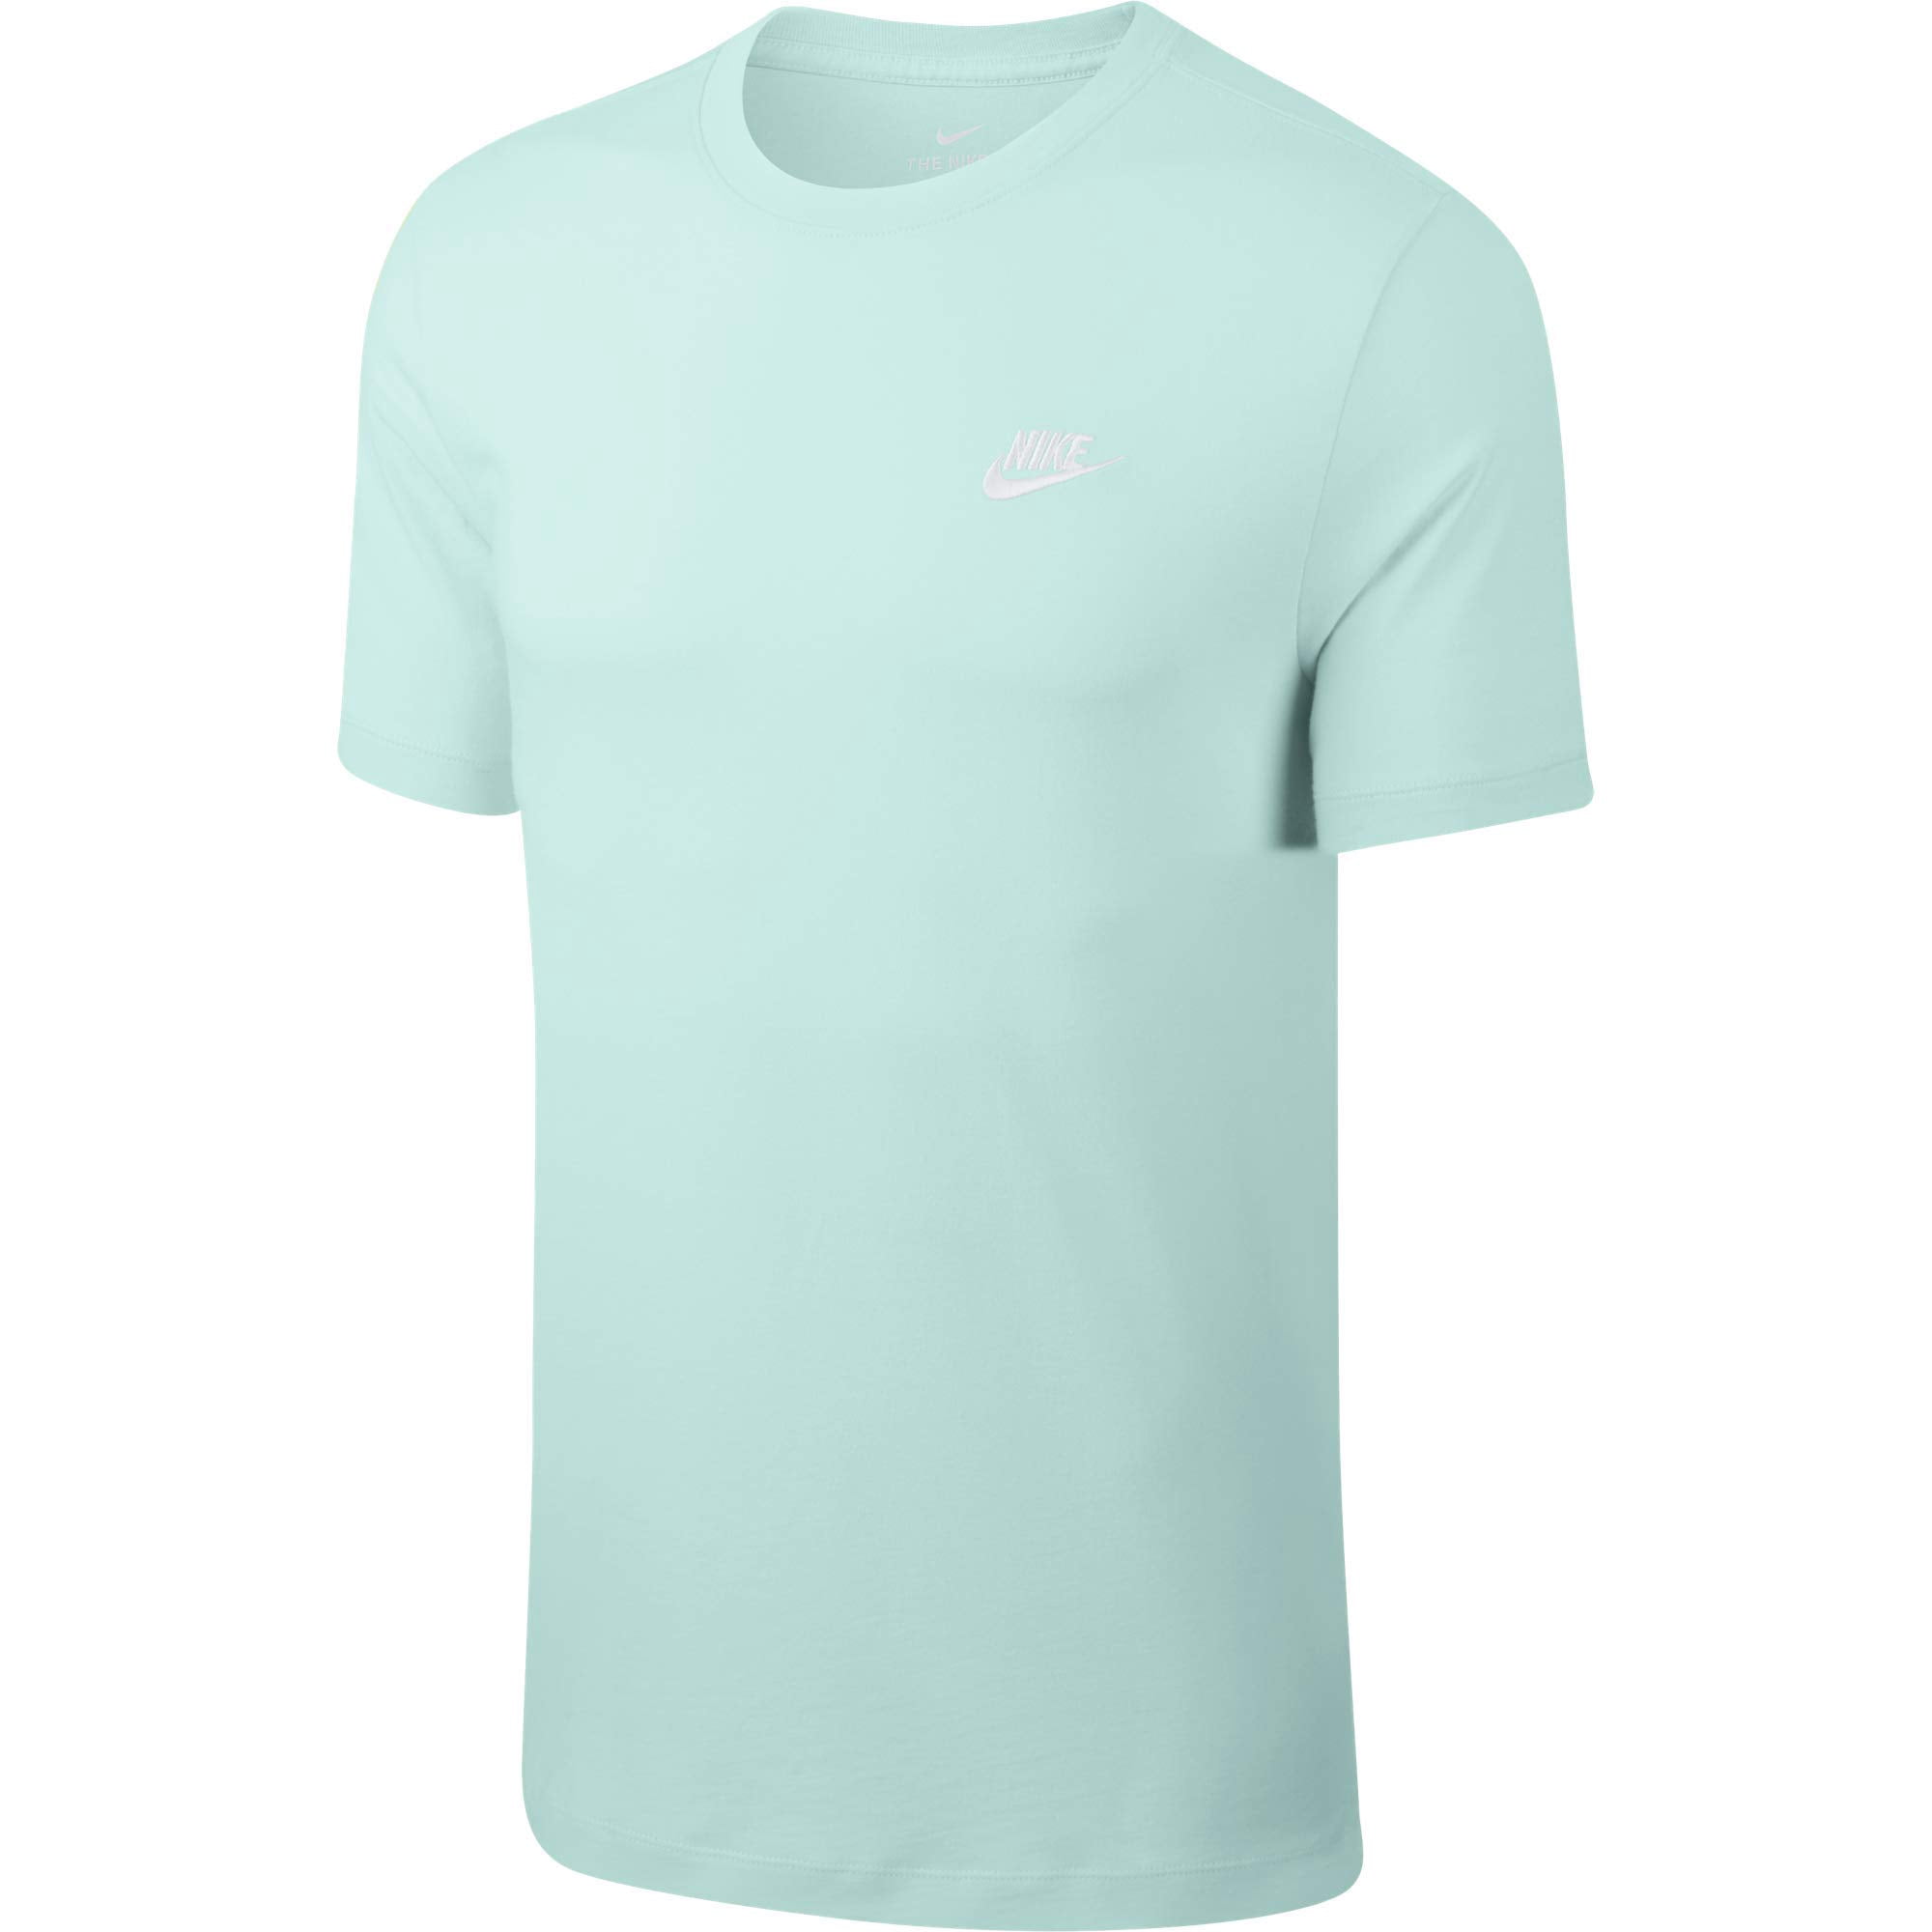 Men's Nike Sportswear Club T-Shirt, Nike Shirt for Men with Classic Fit, Teal Tint/White, | Walmart Canada